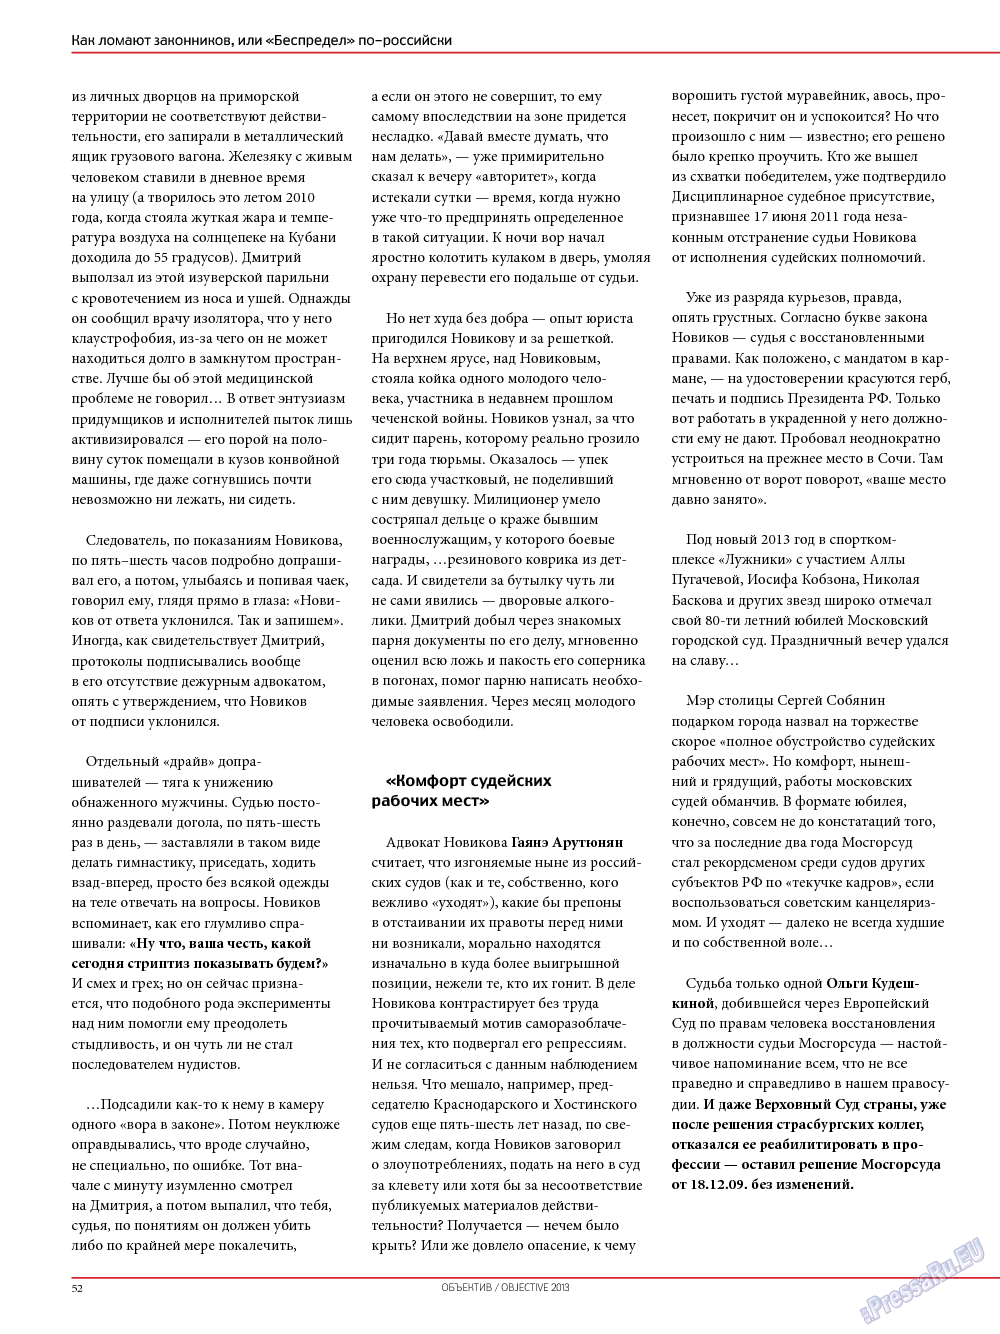 Объектив EU, журнал. 2013 №2 стр.54